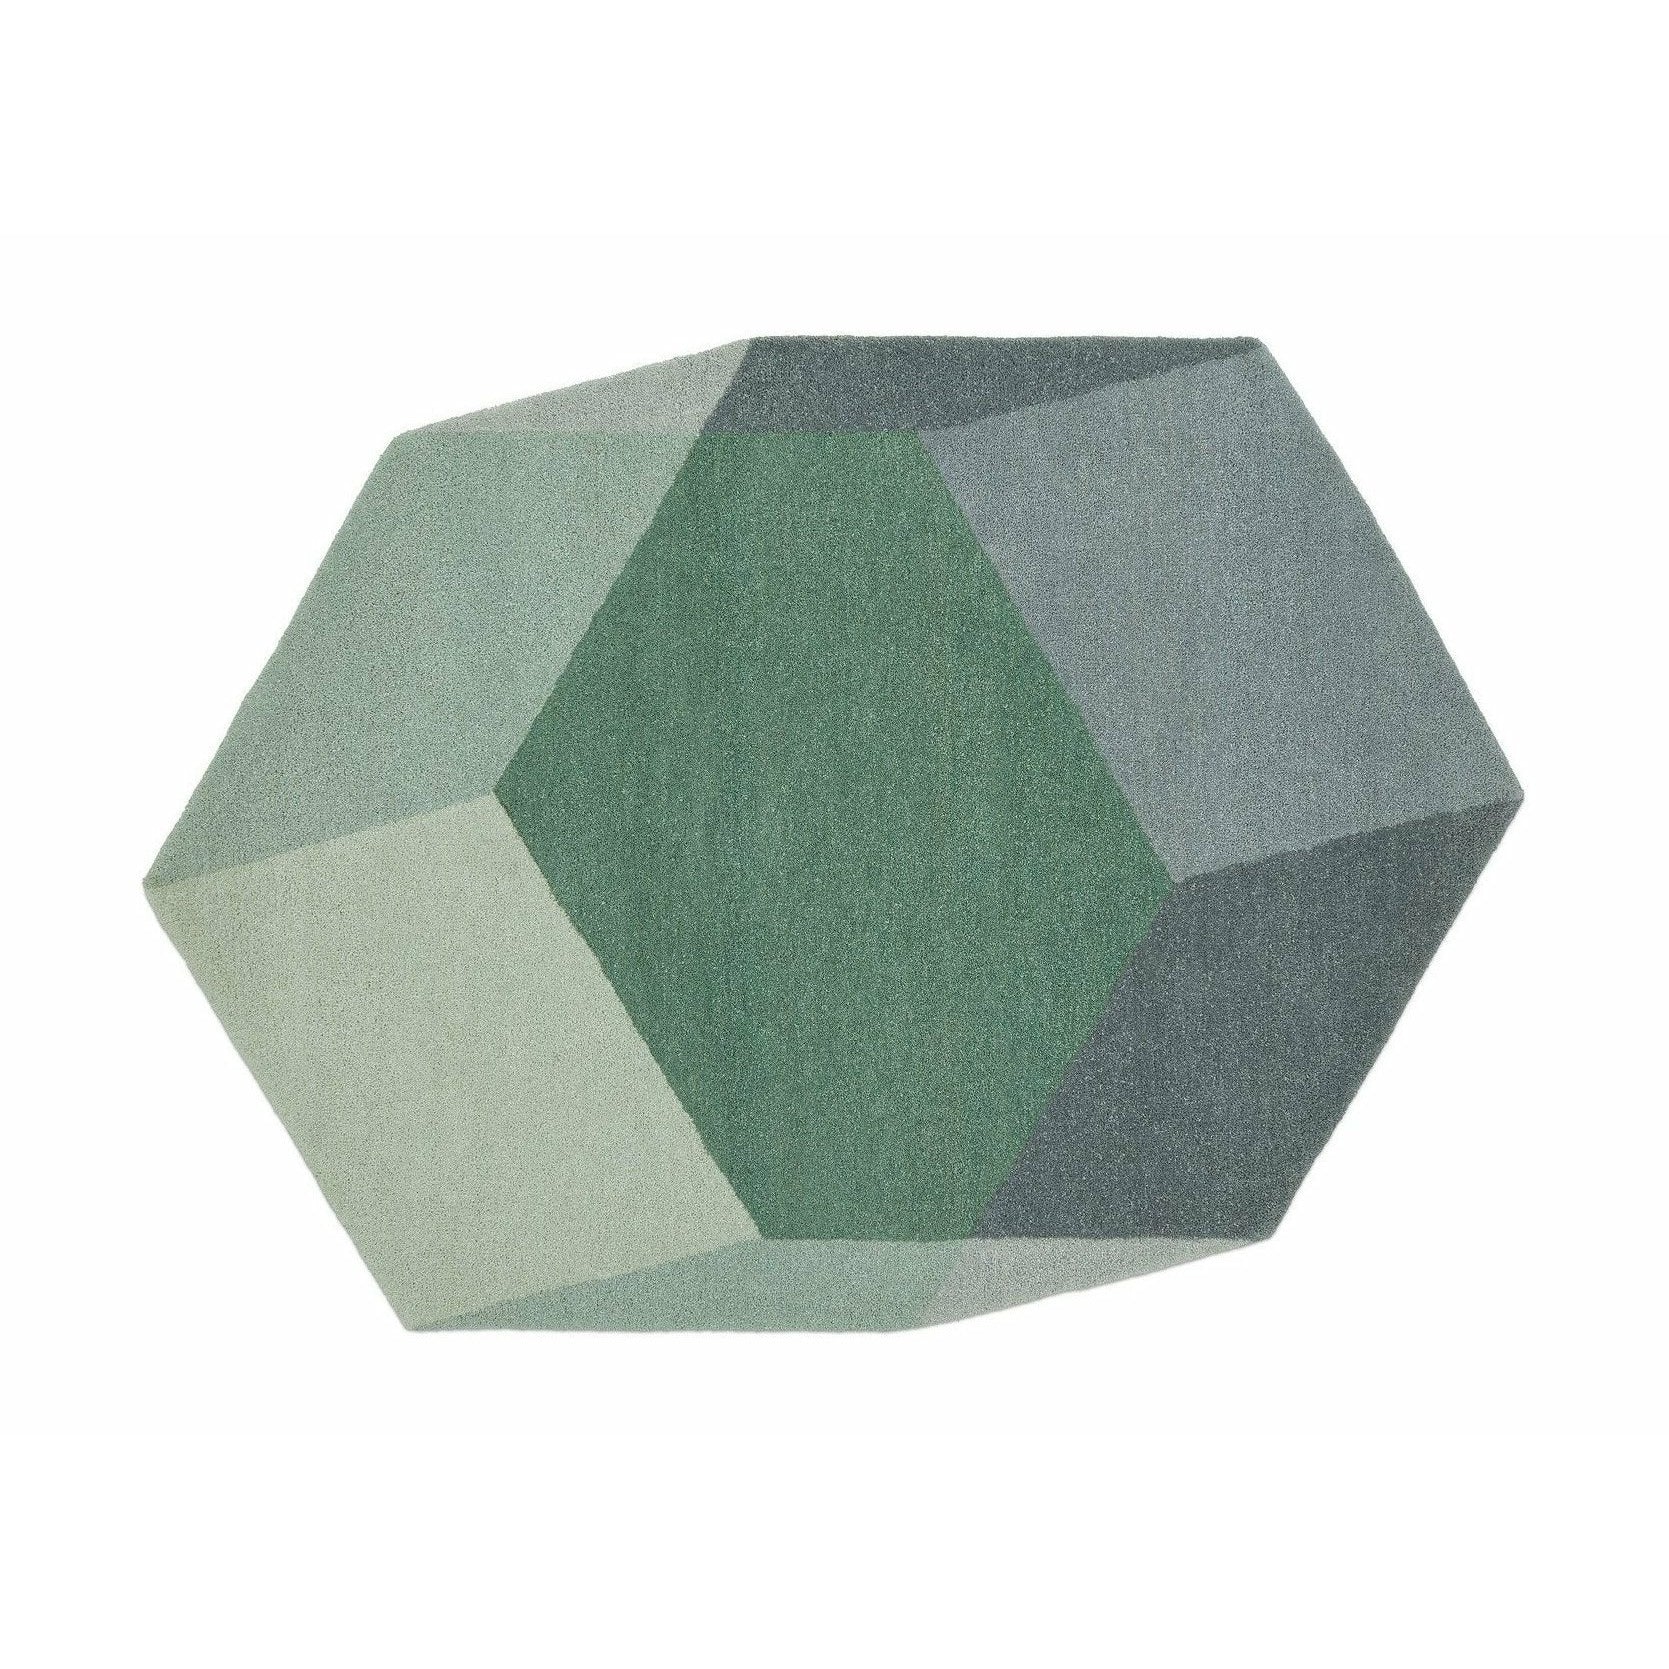 Puik Iso tæppe hexagon, grøn